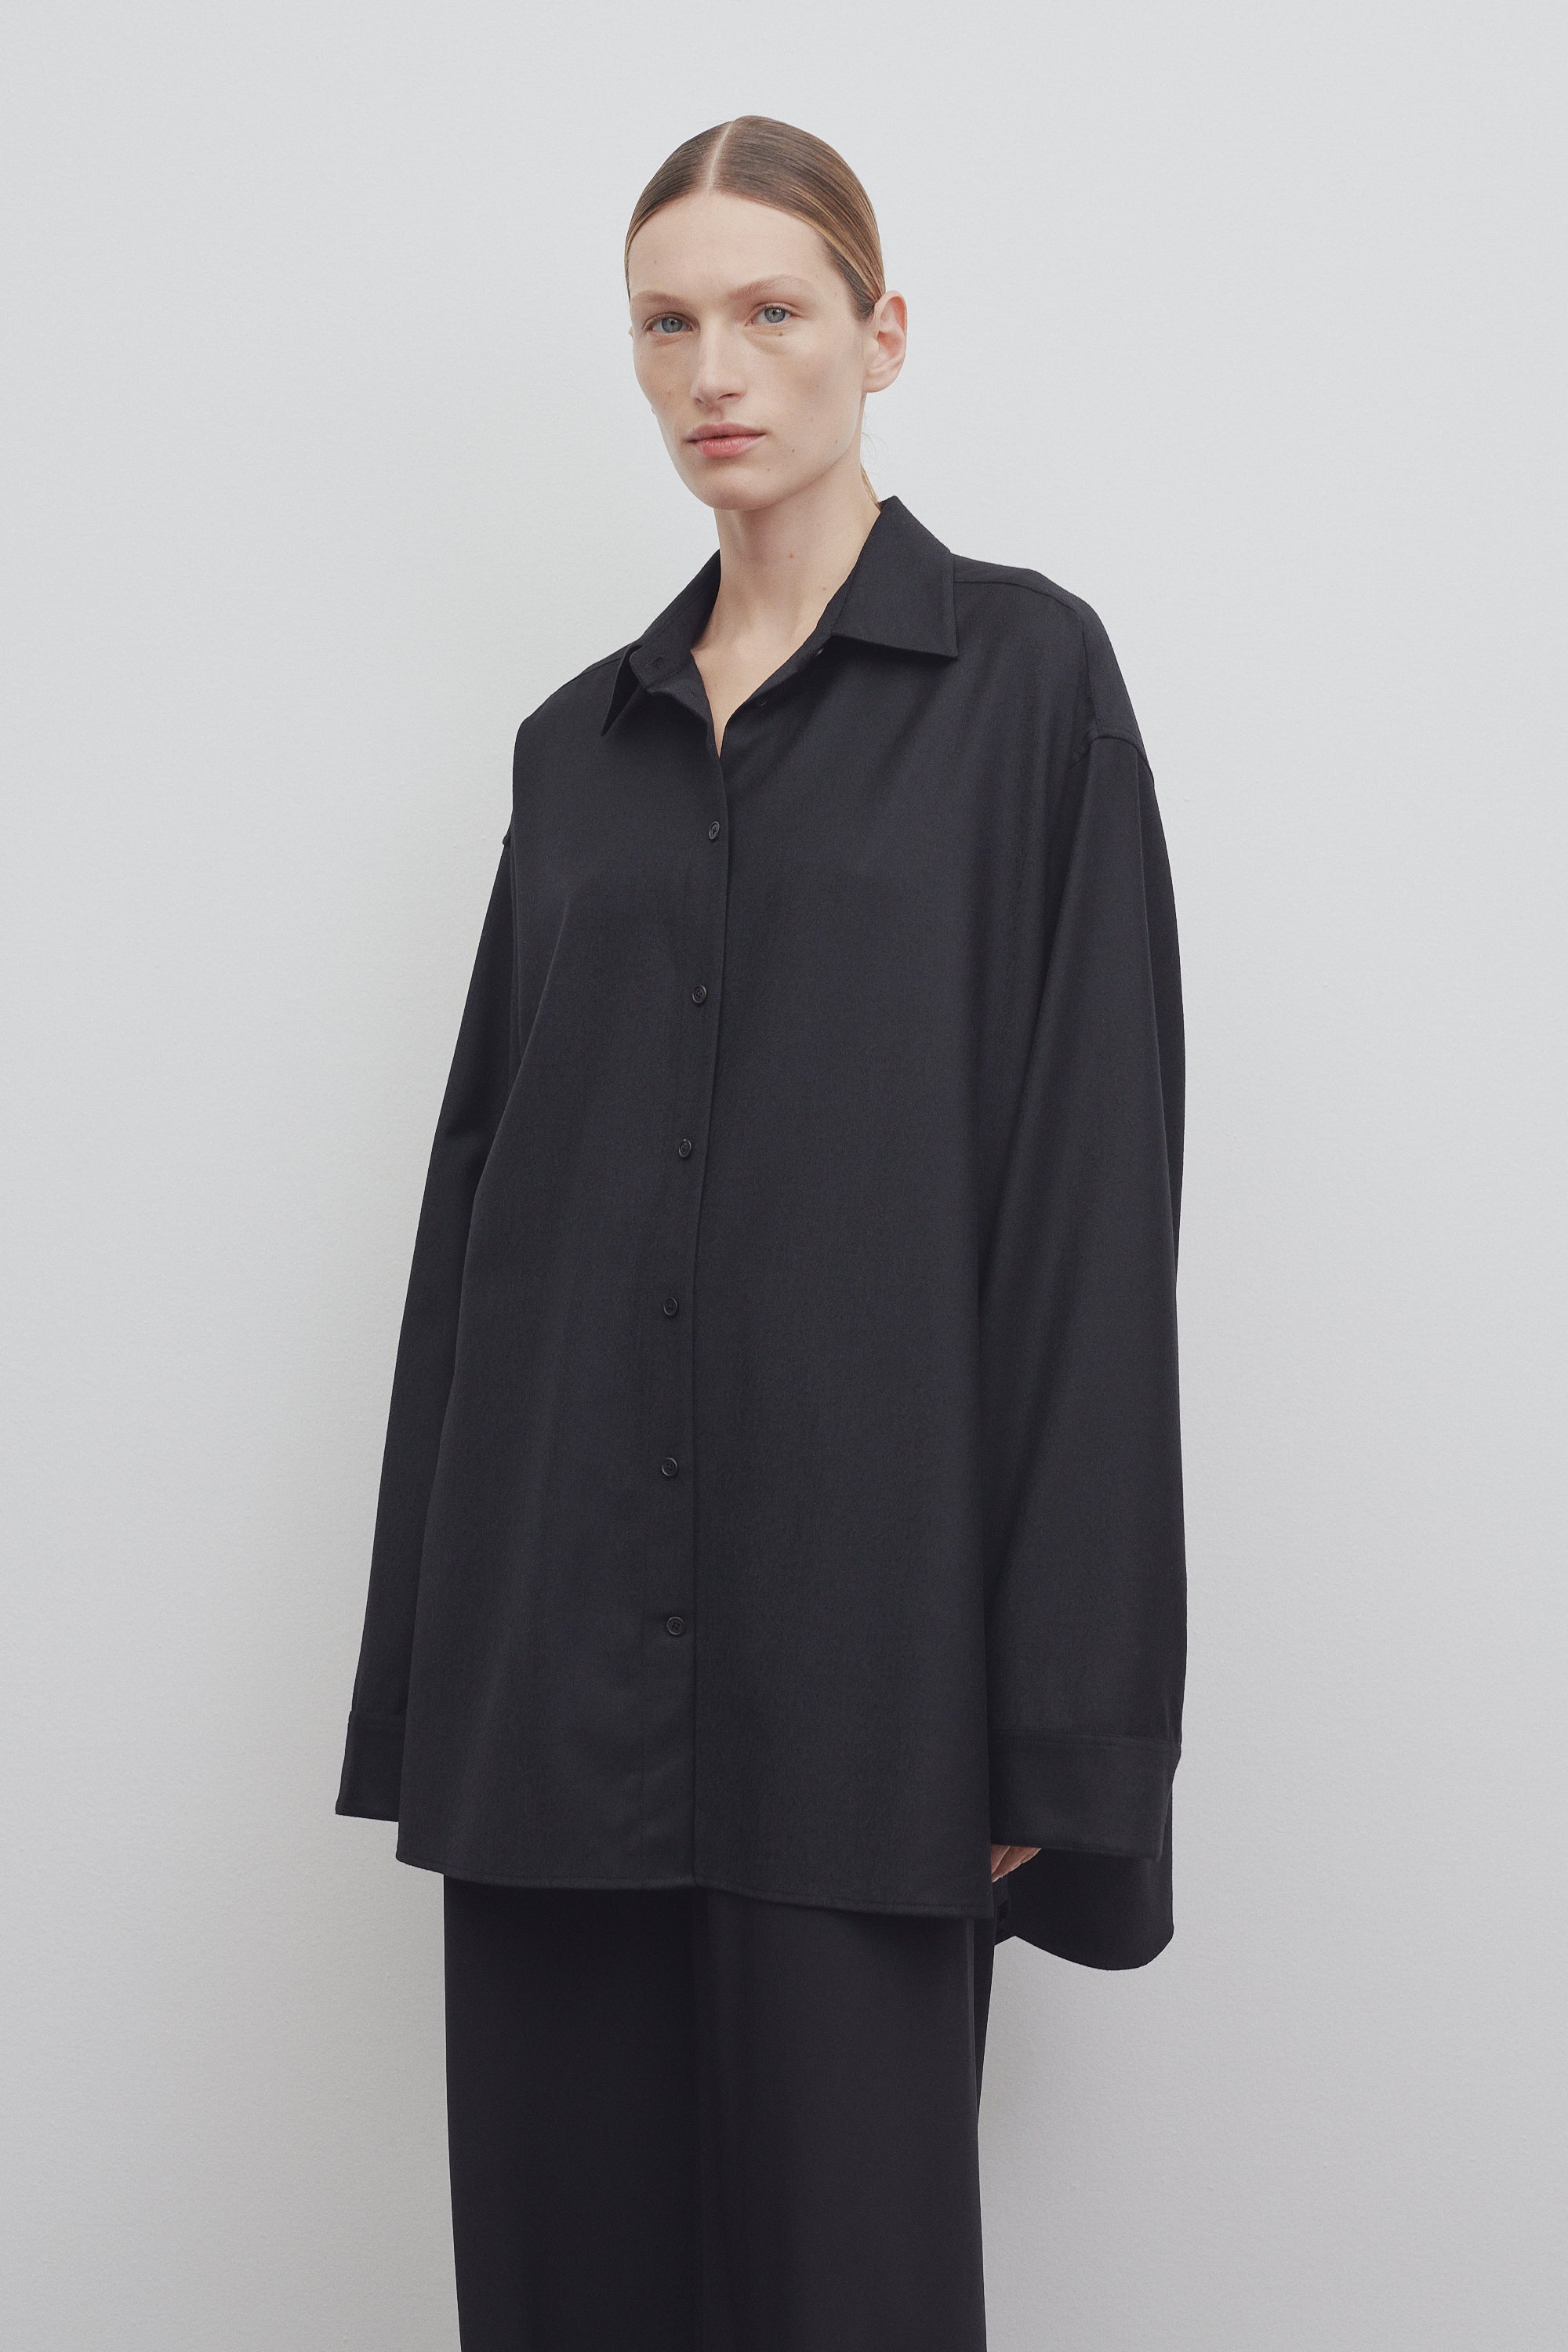 Caroline Shirt Black in Virgin Wool – The Row